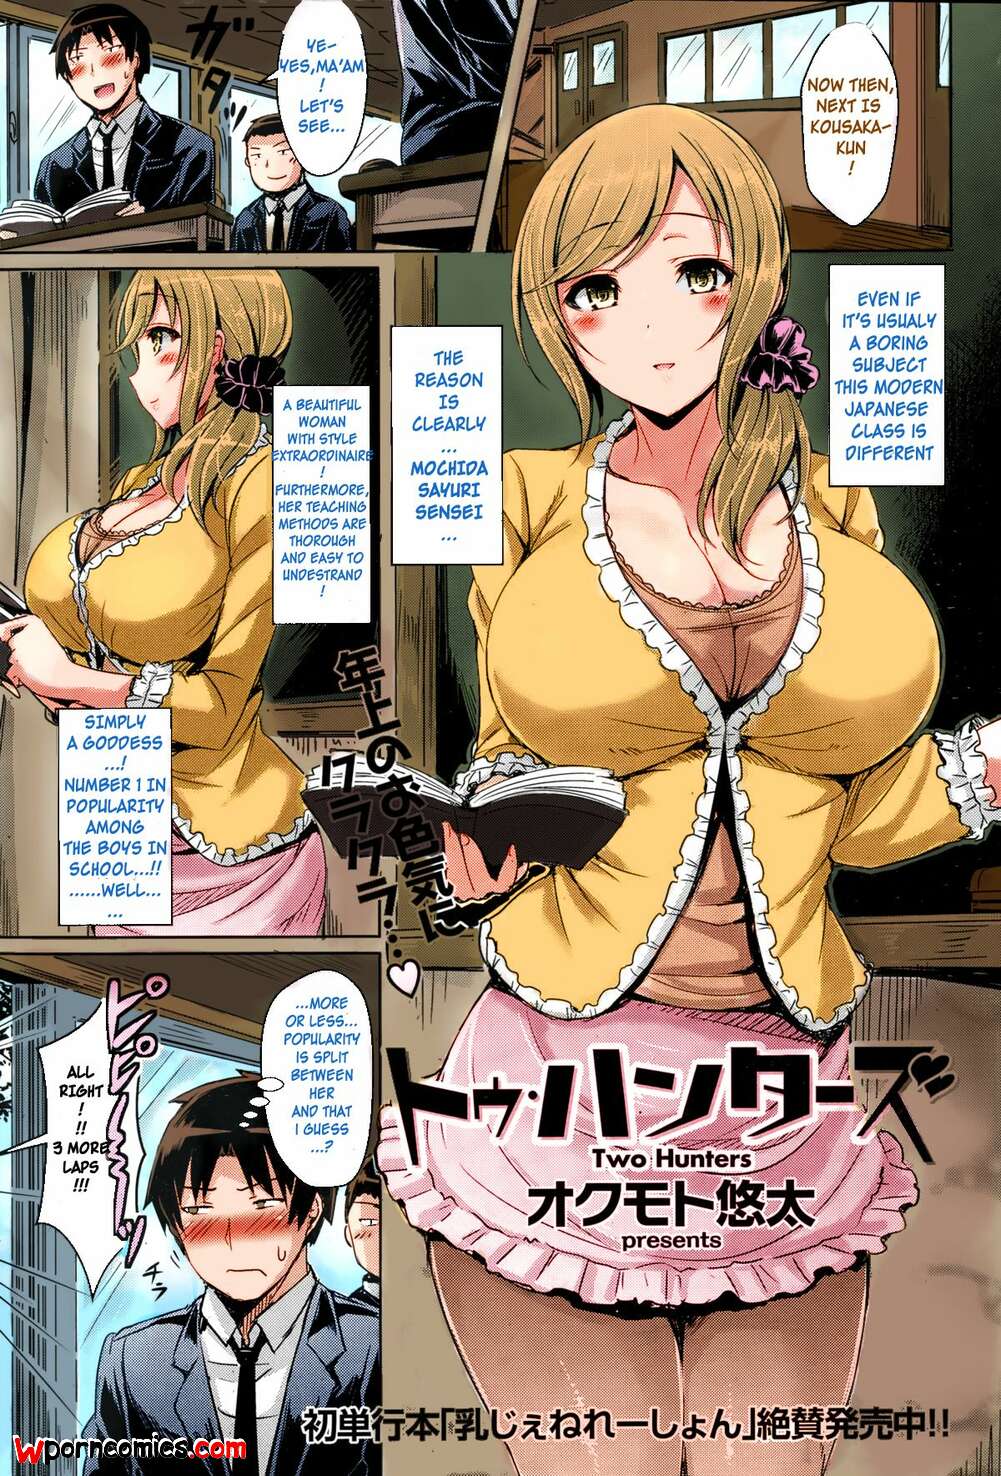 Manga Porn Site